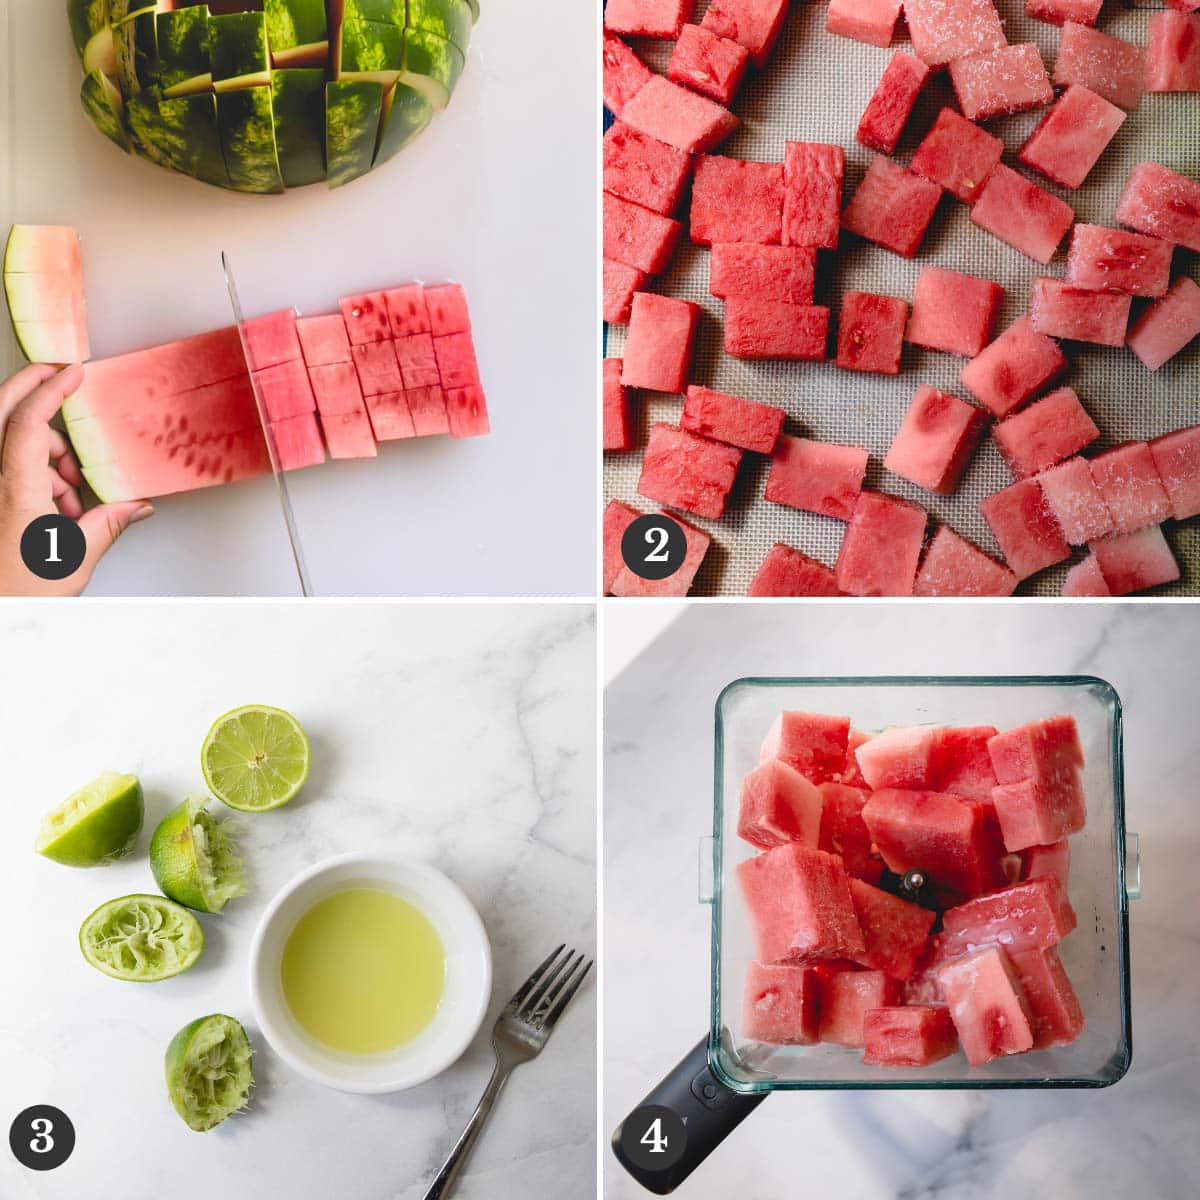 Step by step photos of making a frozen watermelon daiquiri.